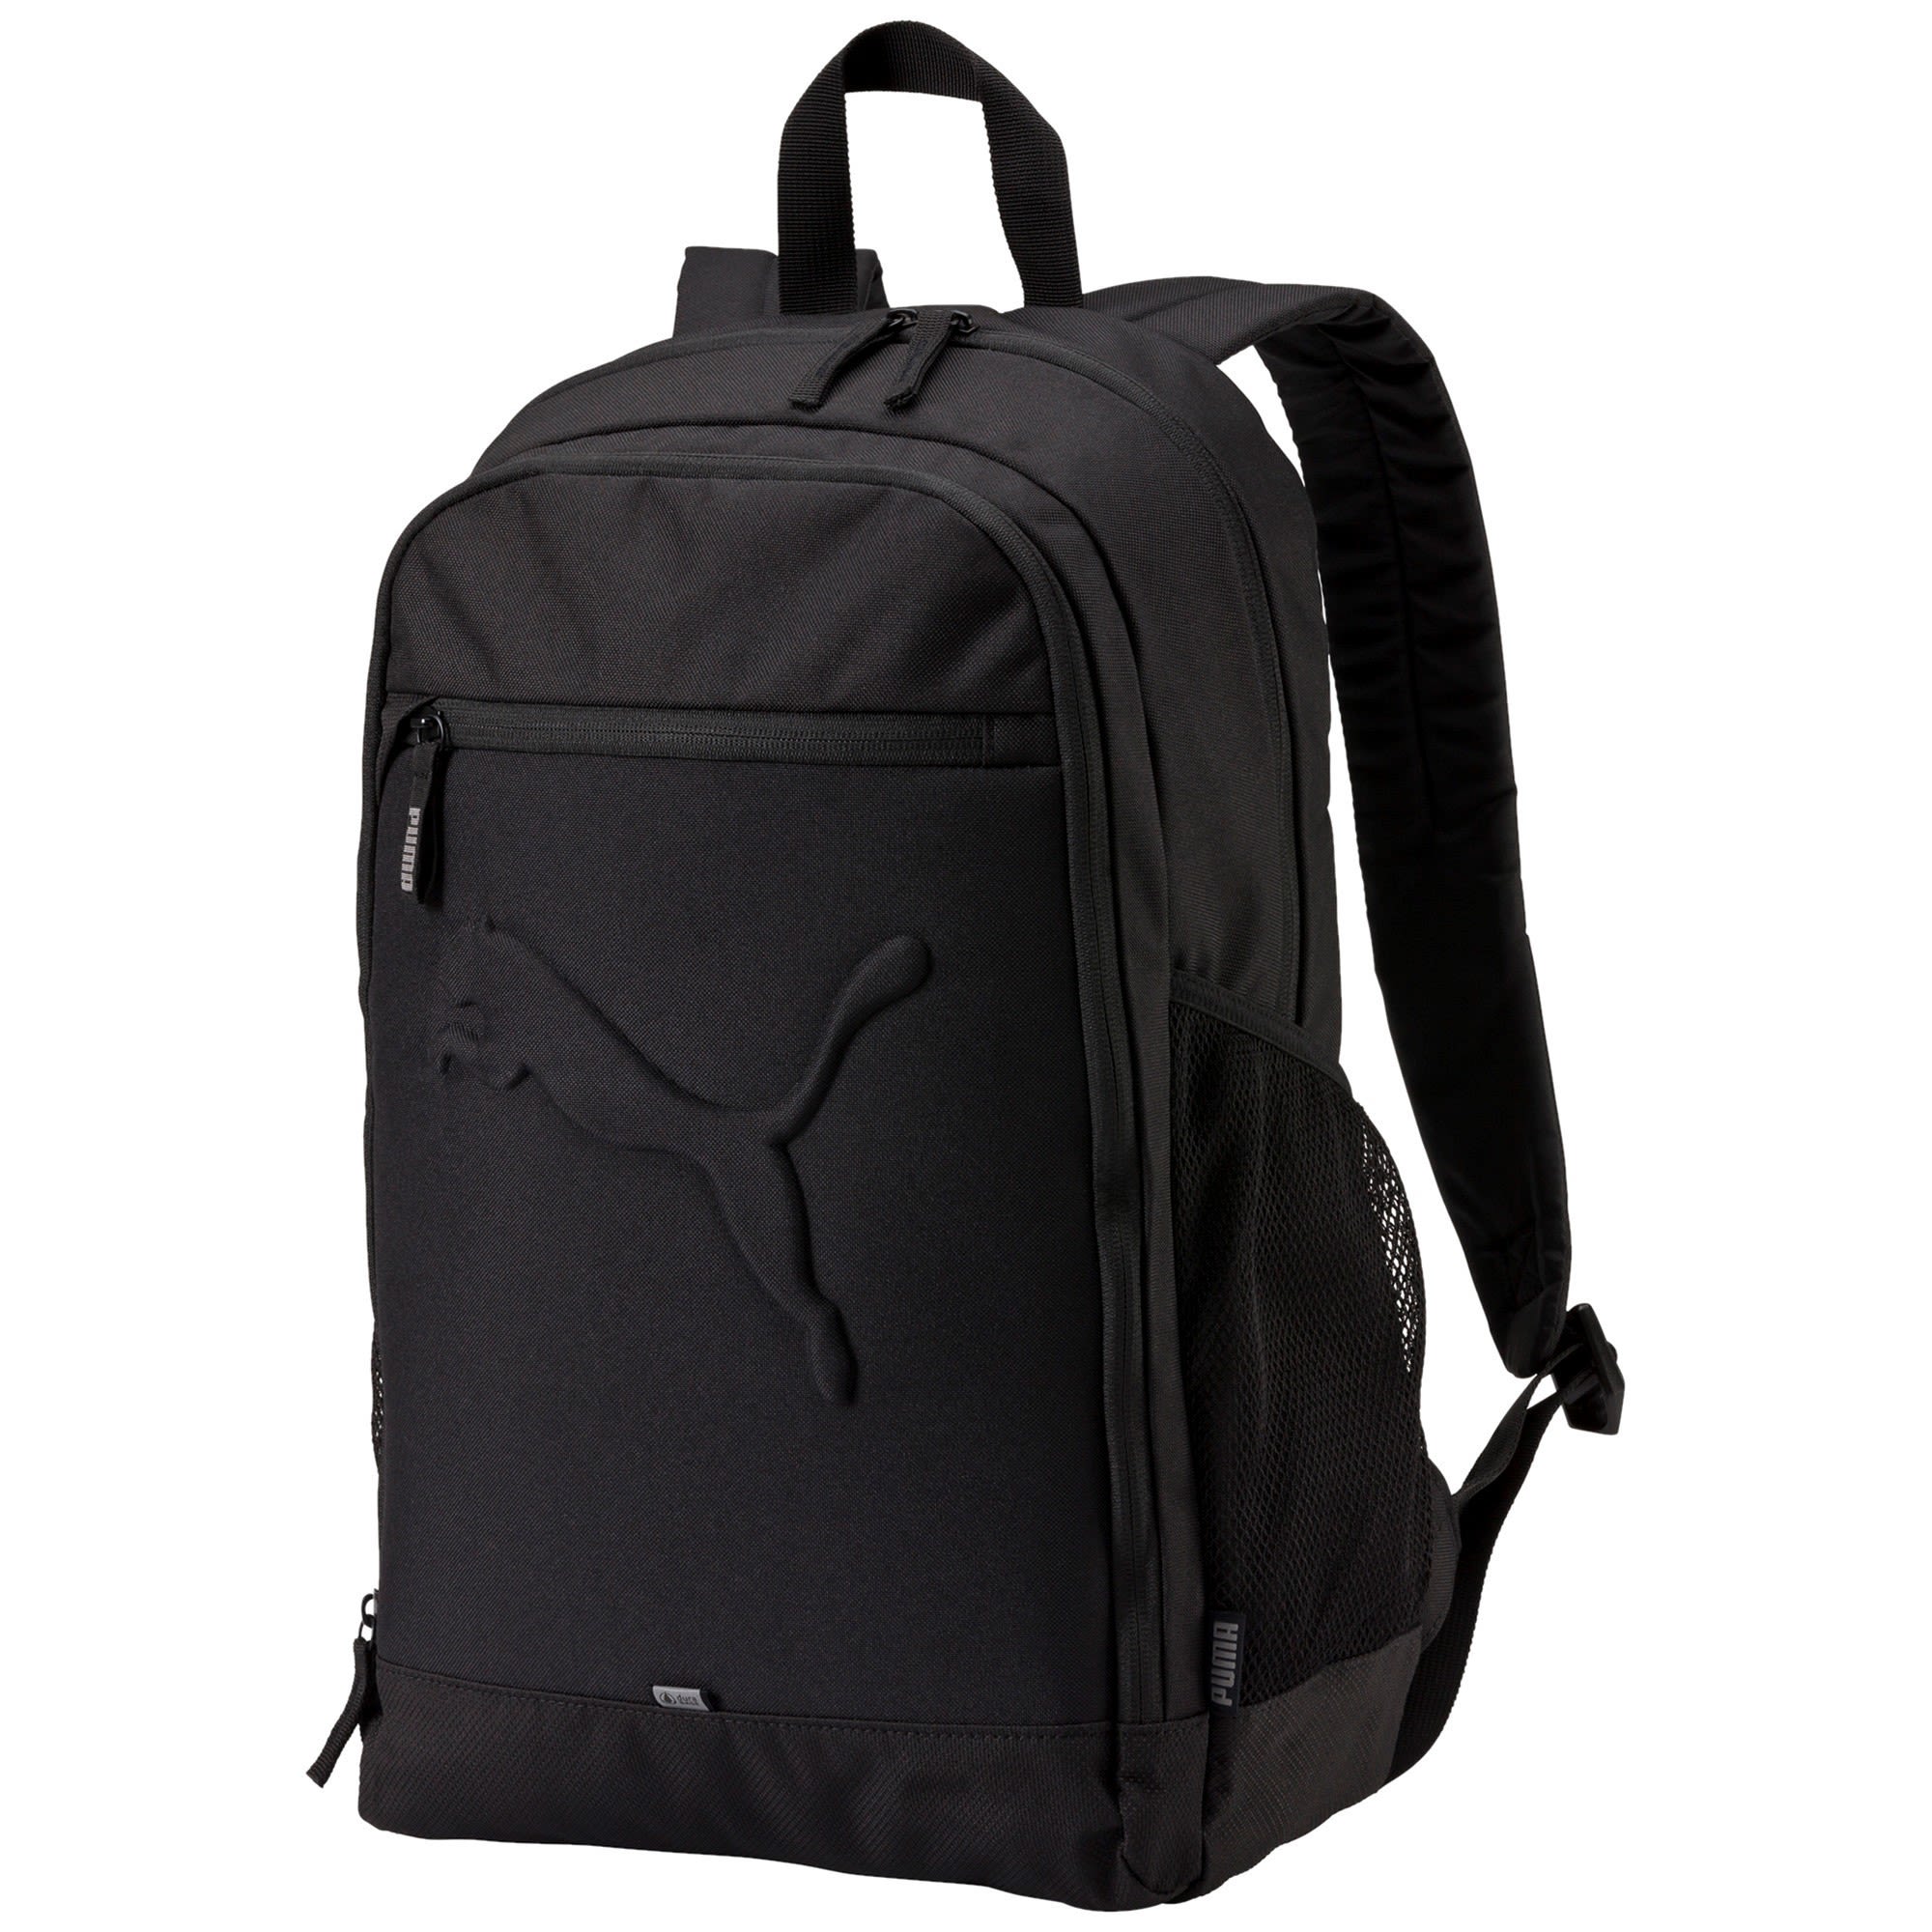 Puma Buzz Backpack Schwarz- Daypacks- Grsse 26l - Farbe Black unter Puma